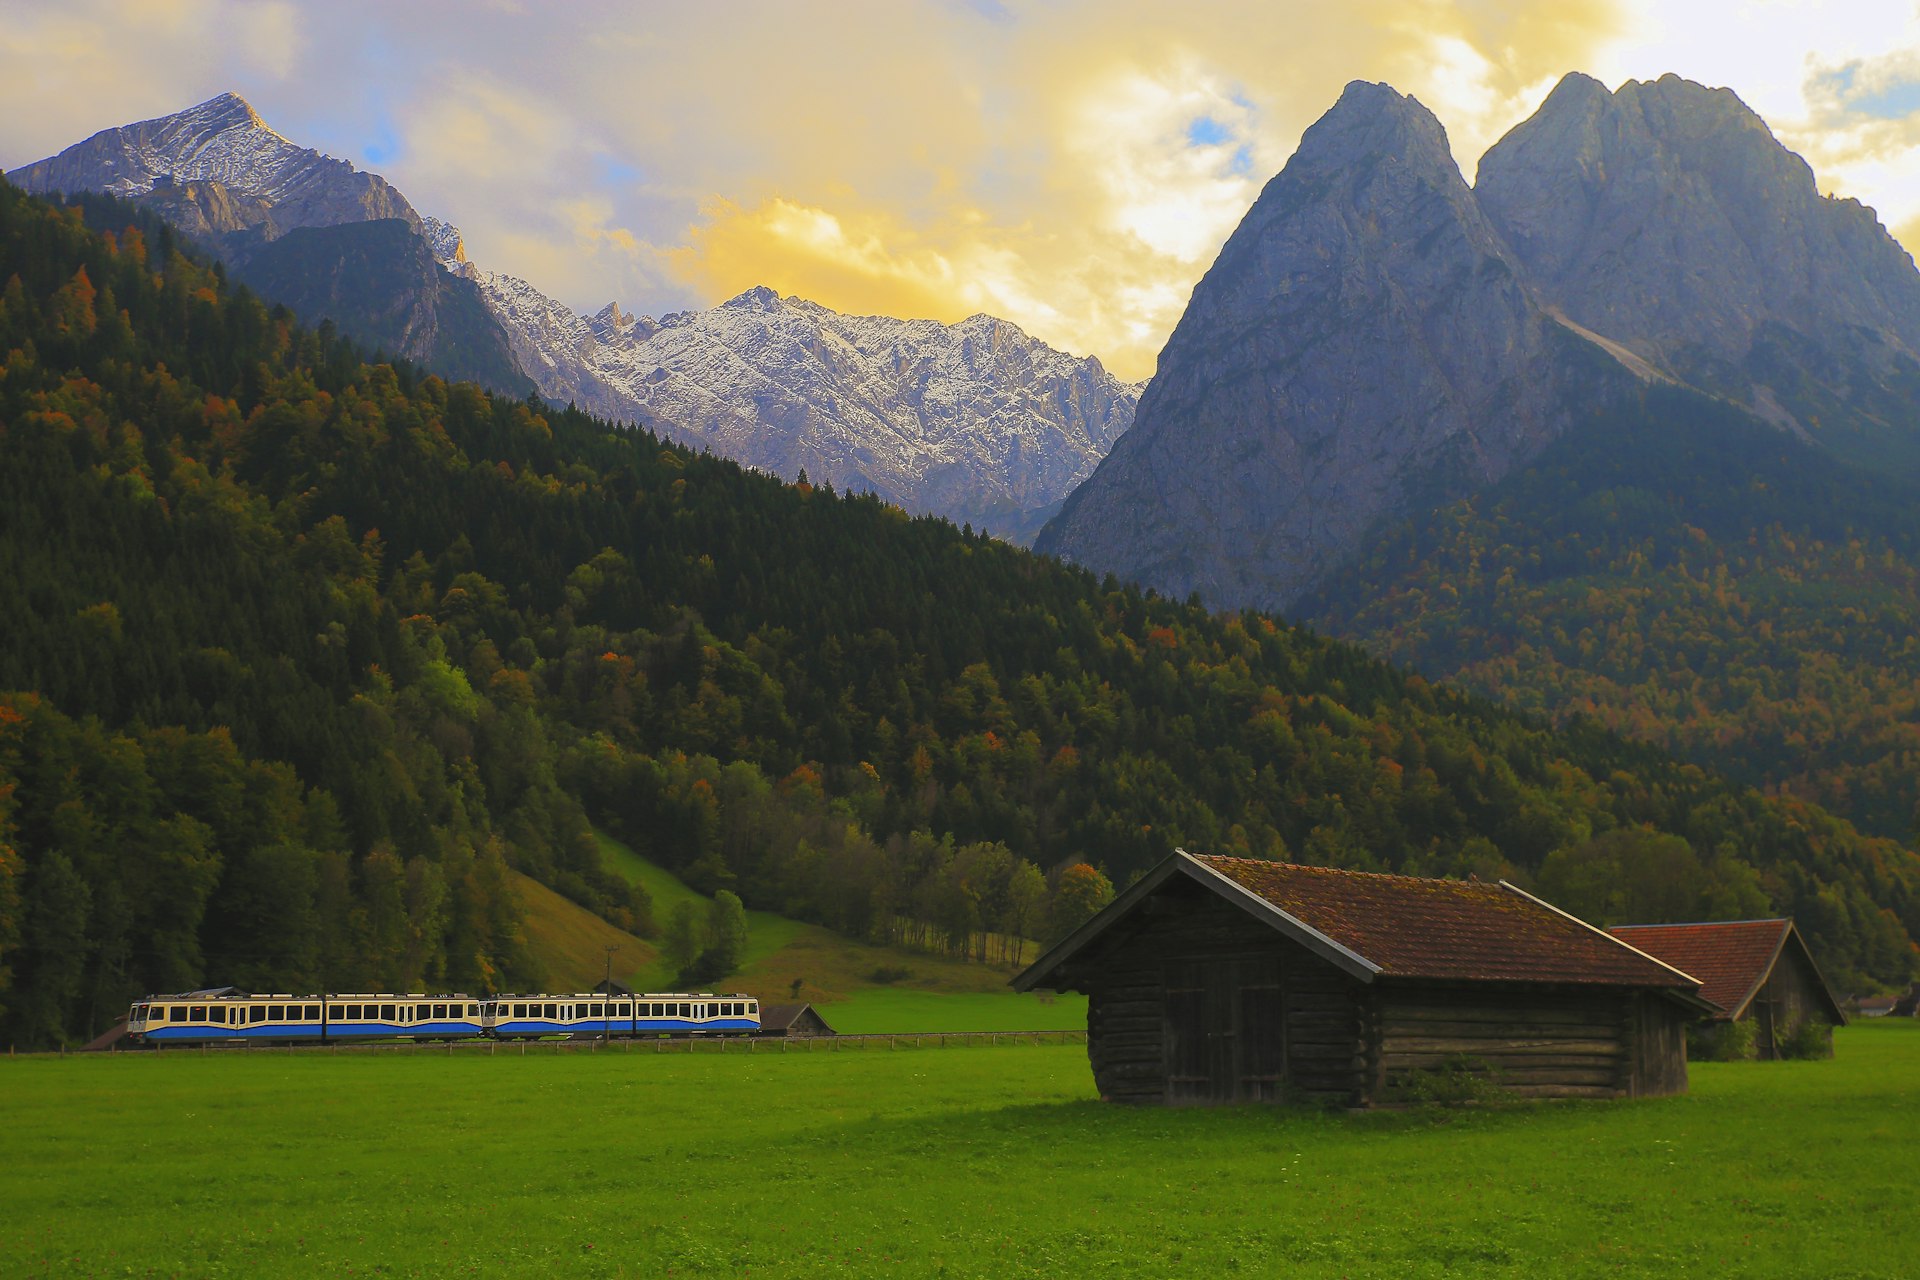 Train passing the Bavarian Alps near Garmisch-Partenkirchen, Germany